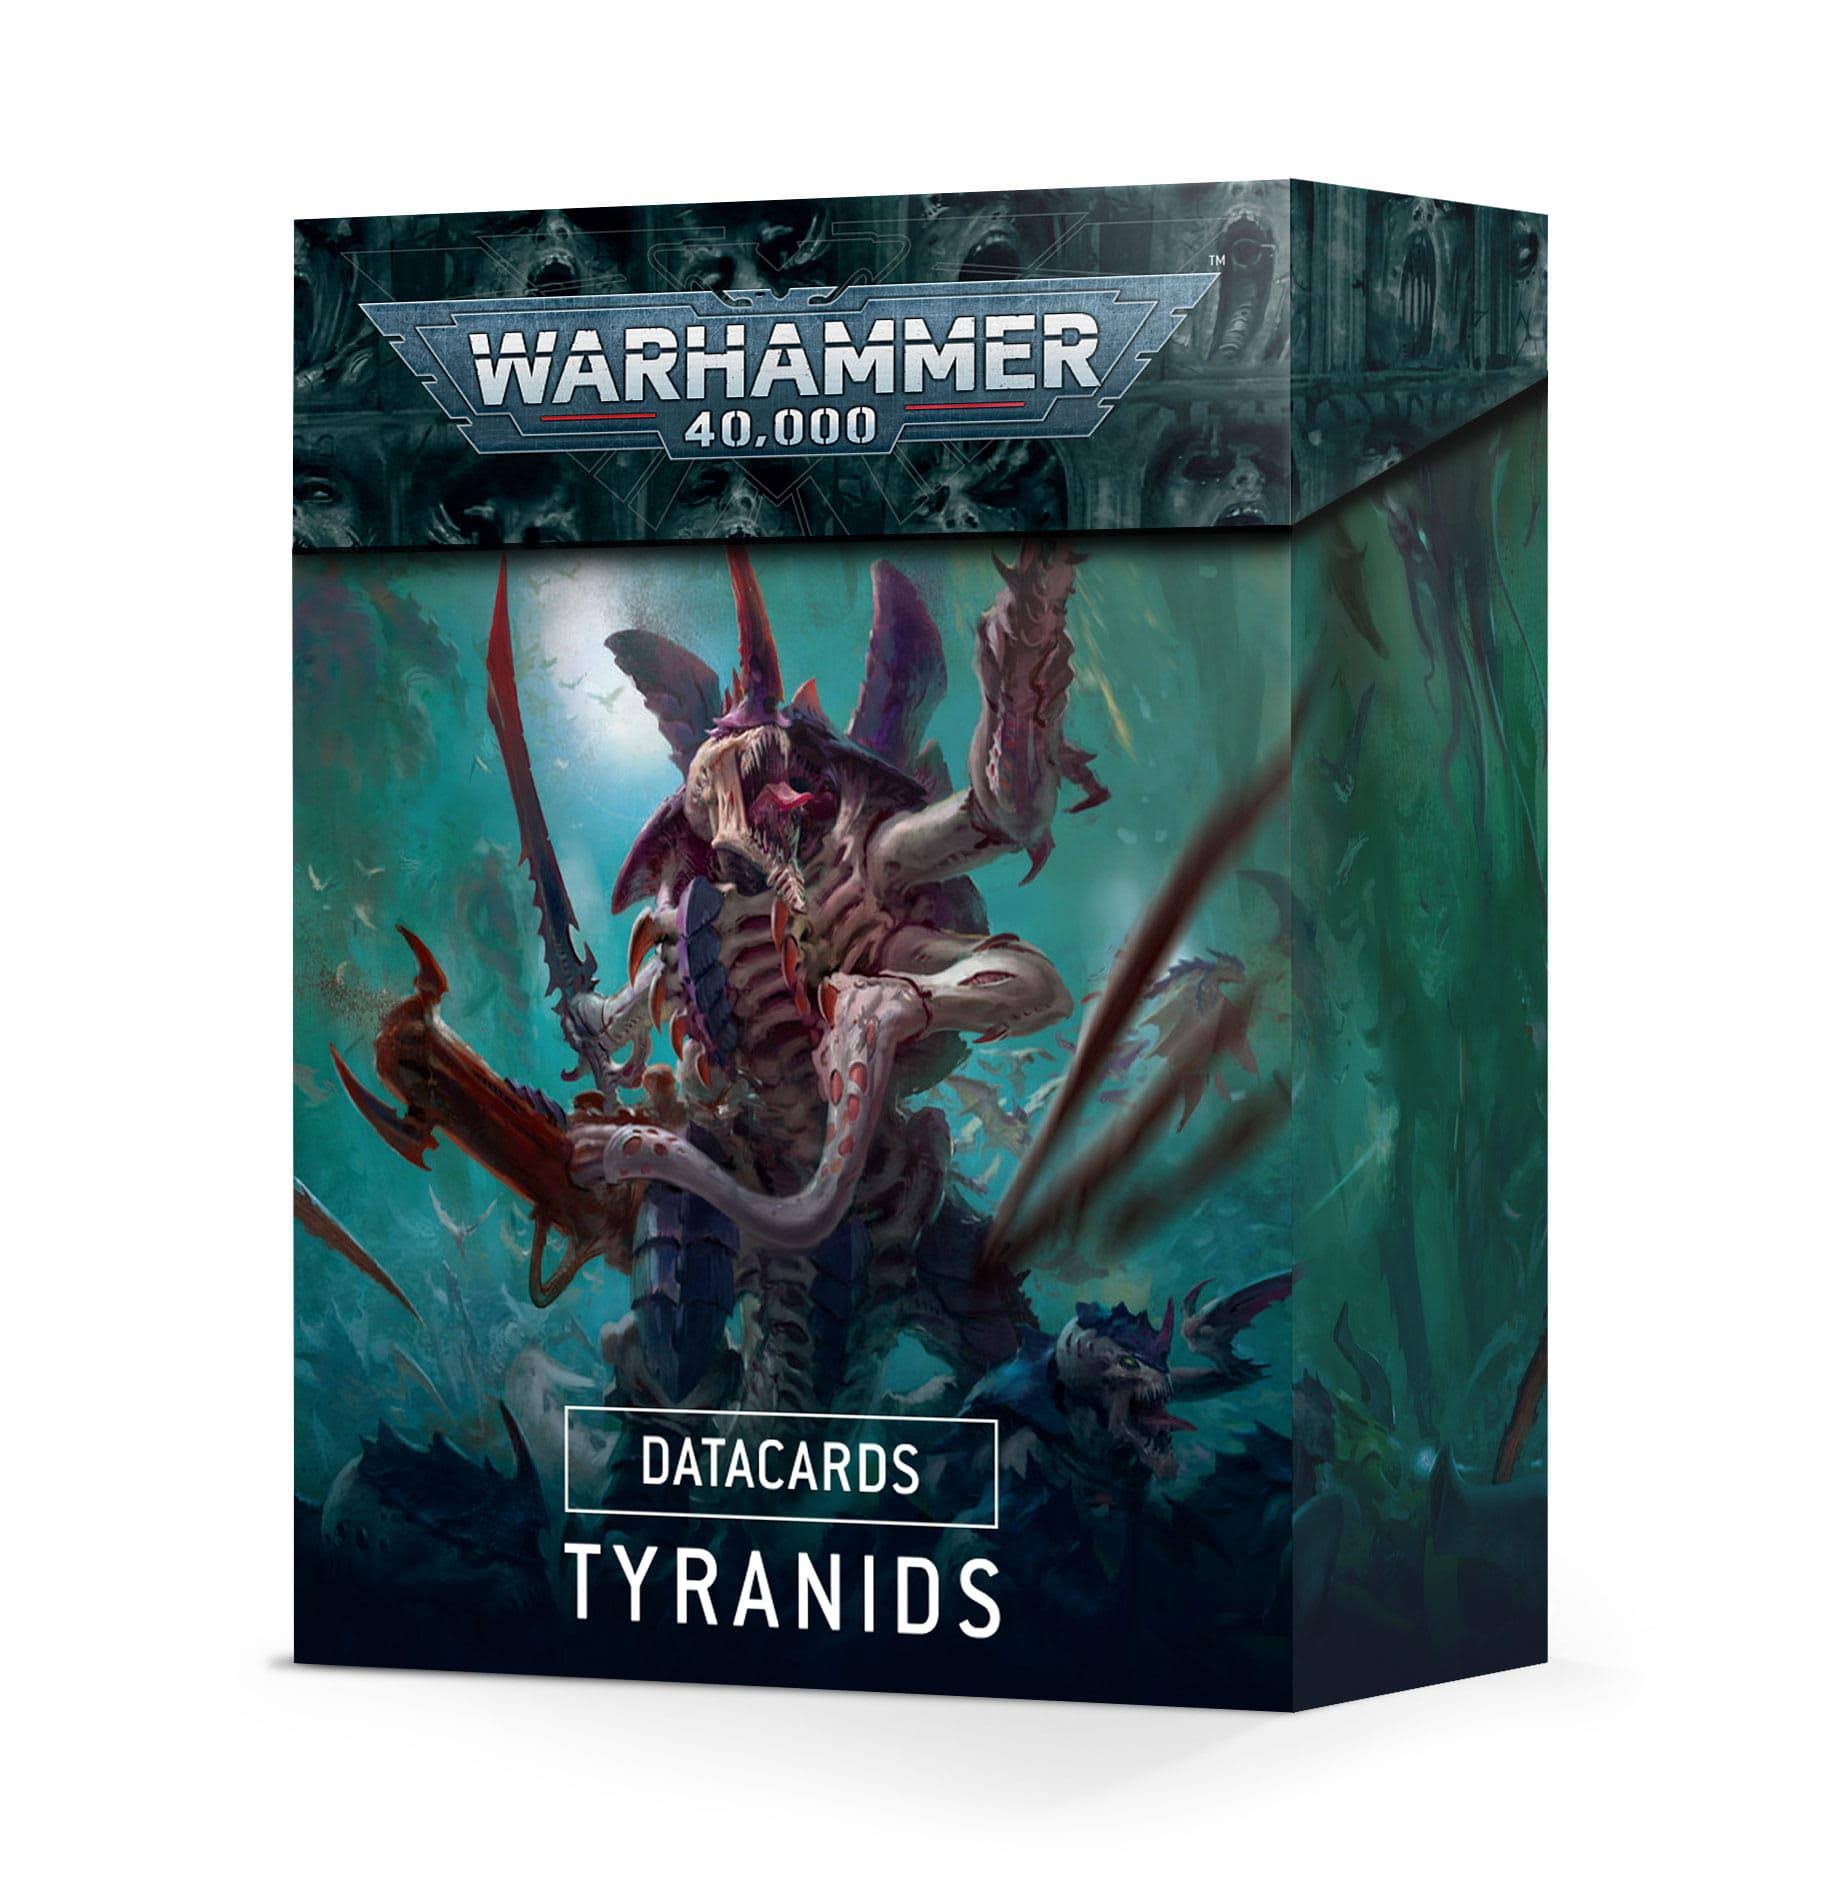 Warhammer Datacards Tyranids